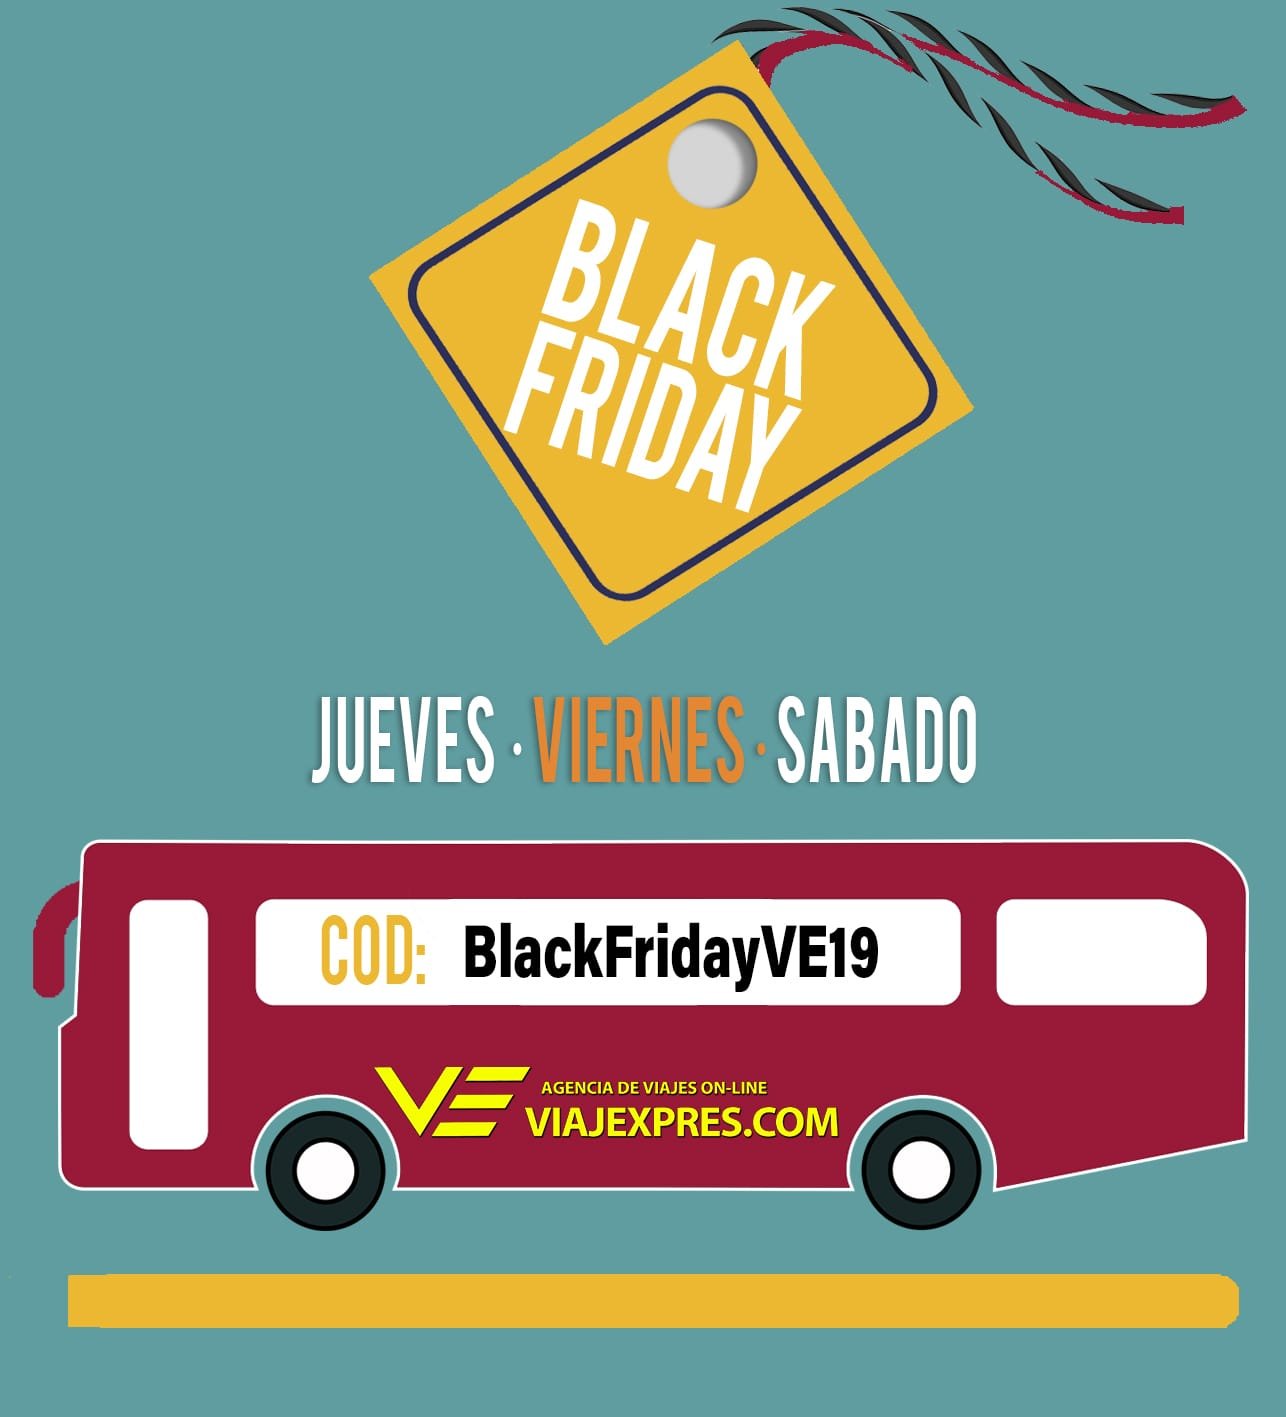 ¡¡¡Black Friday en Viajexpres.com!!!